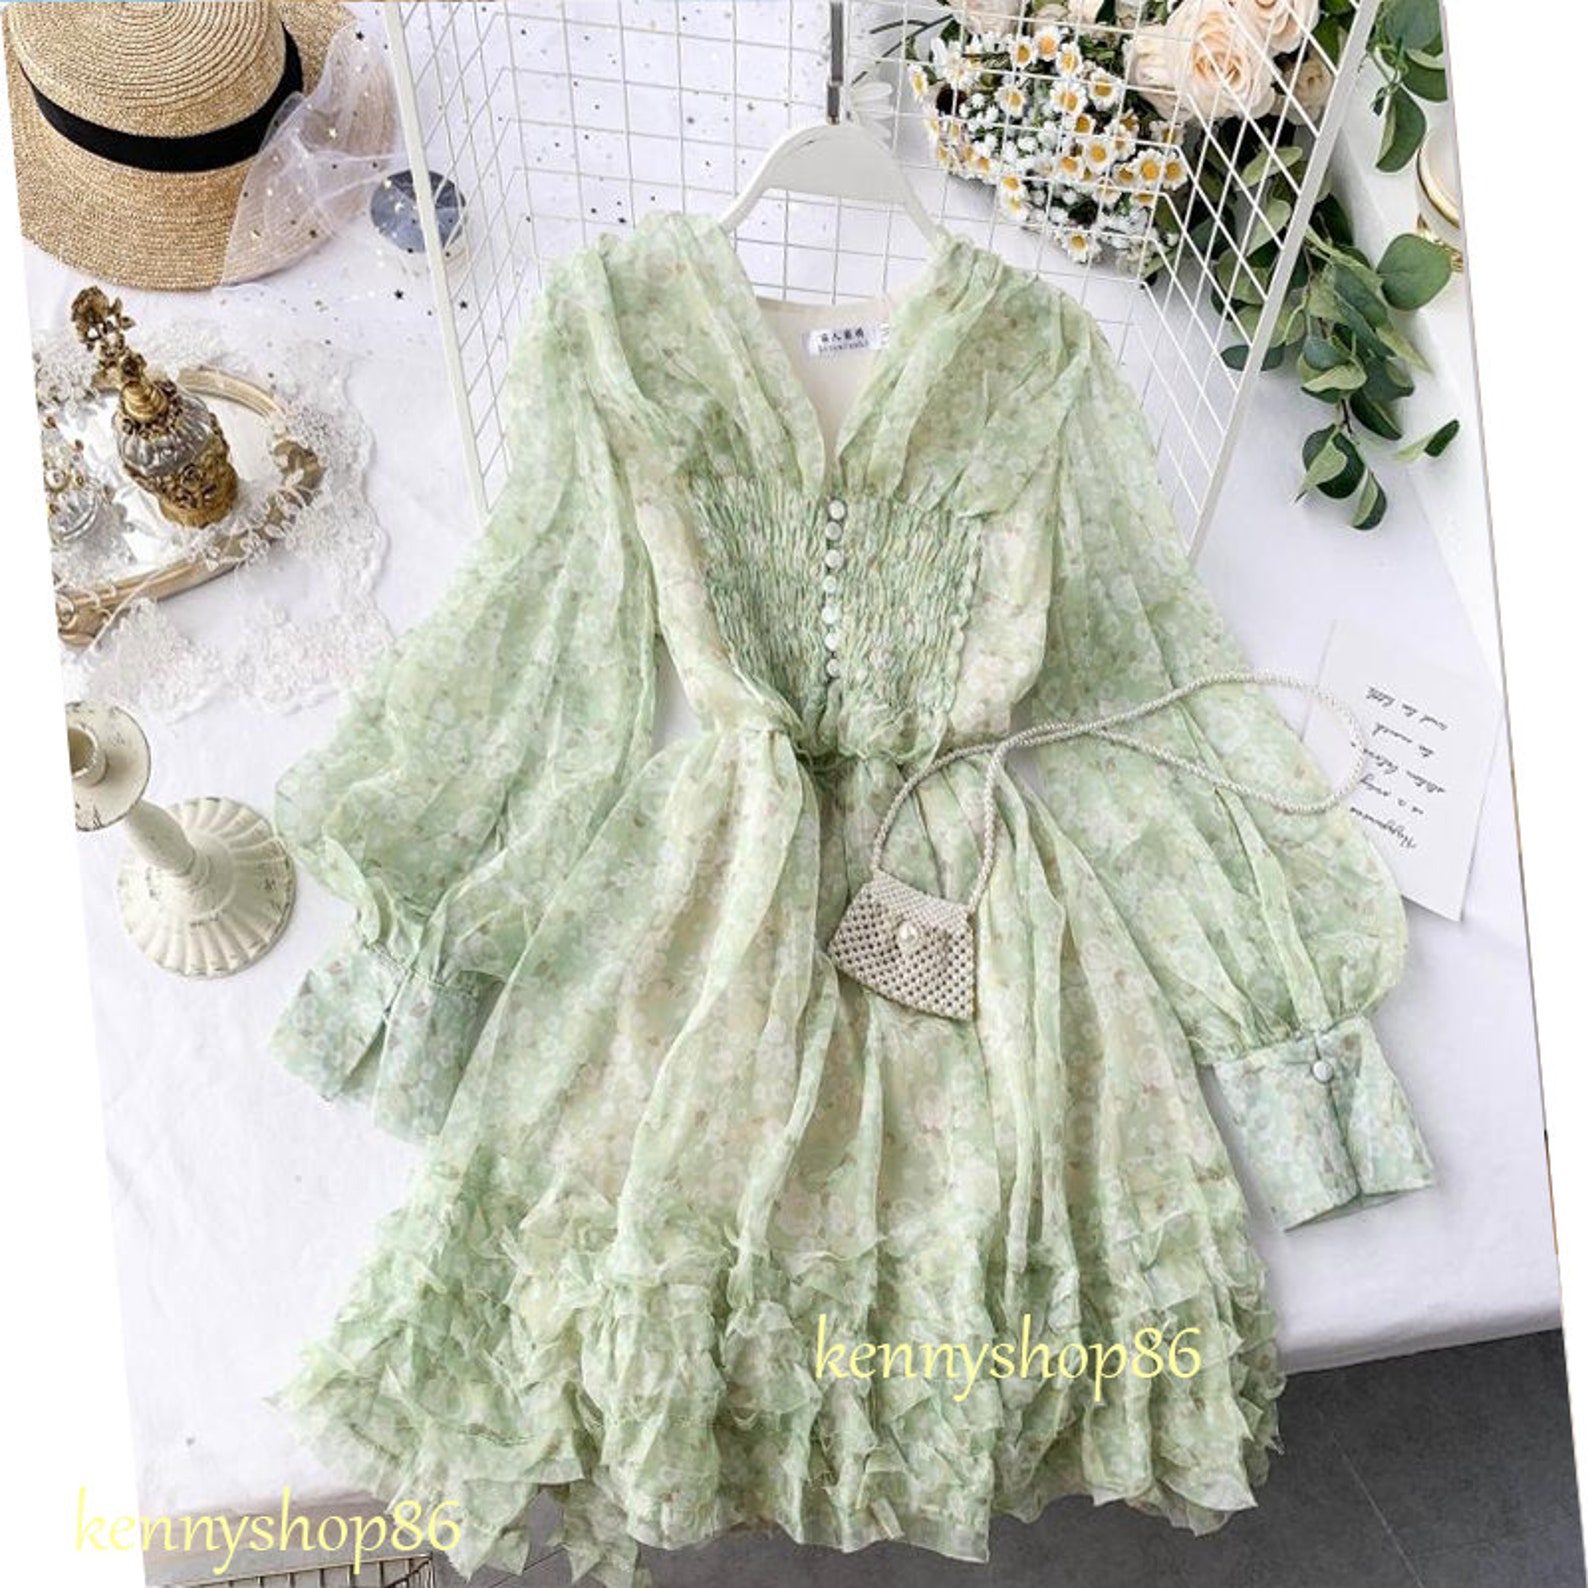 Cottagecore clothing aesthetic dress goddess dress green | Etsy